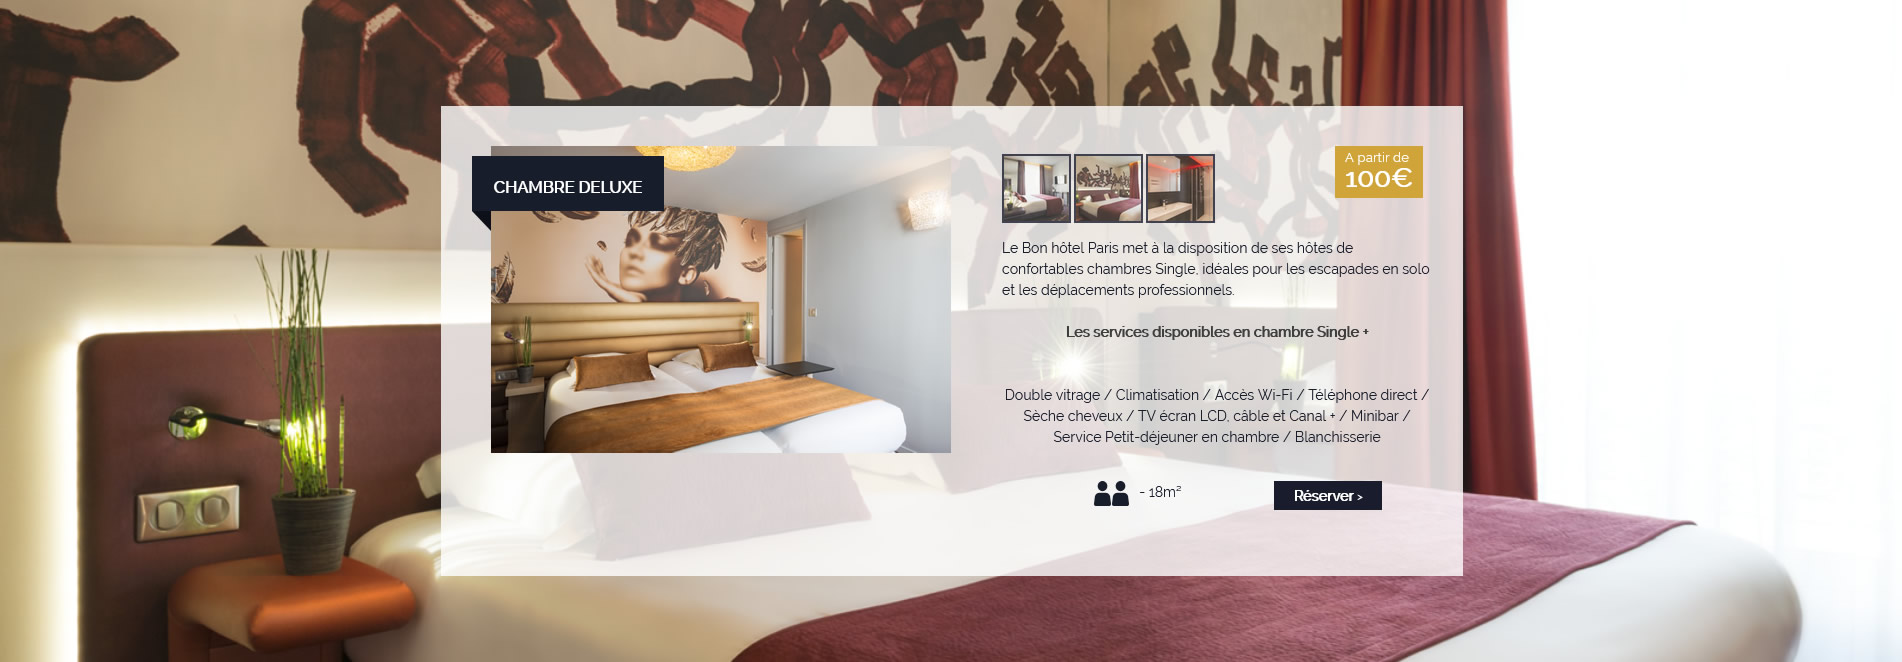 Le Bon Hotel page